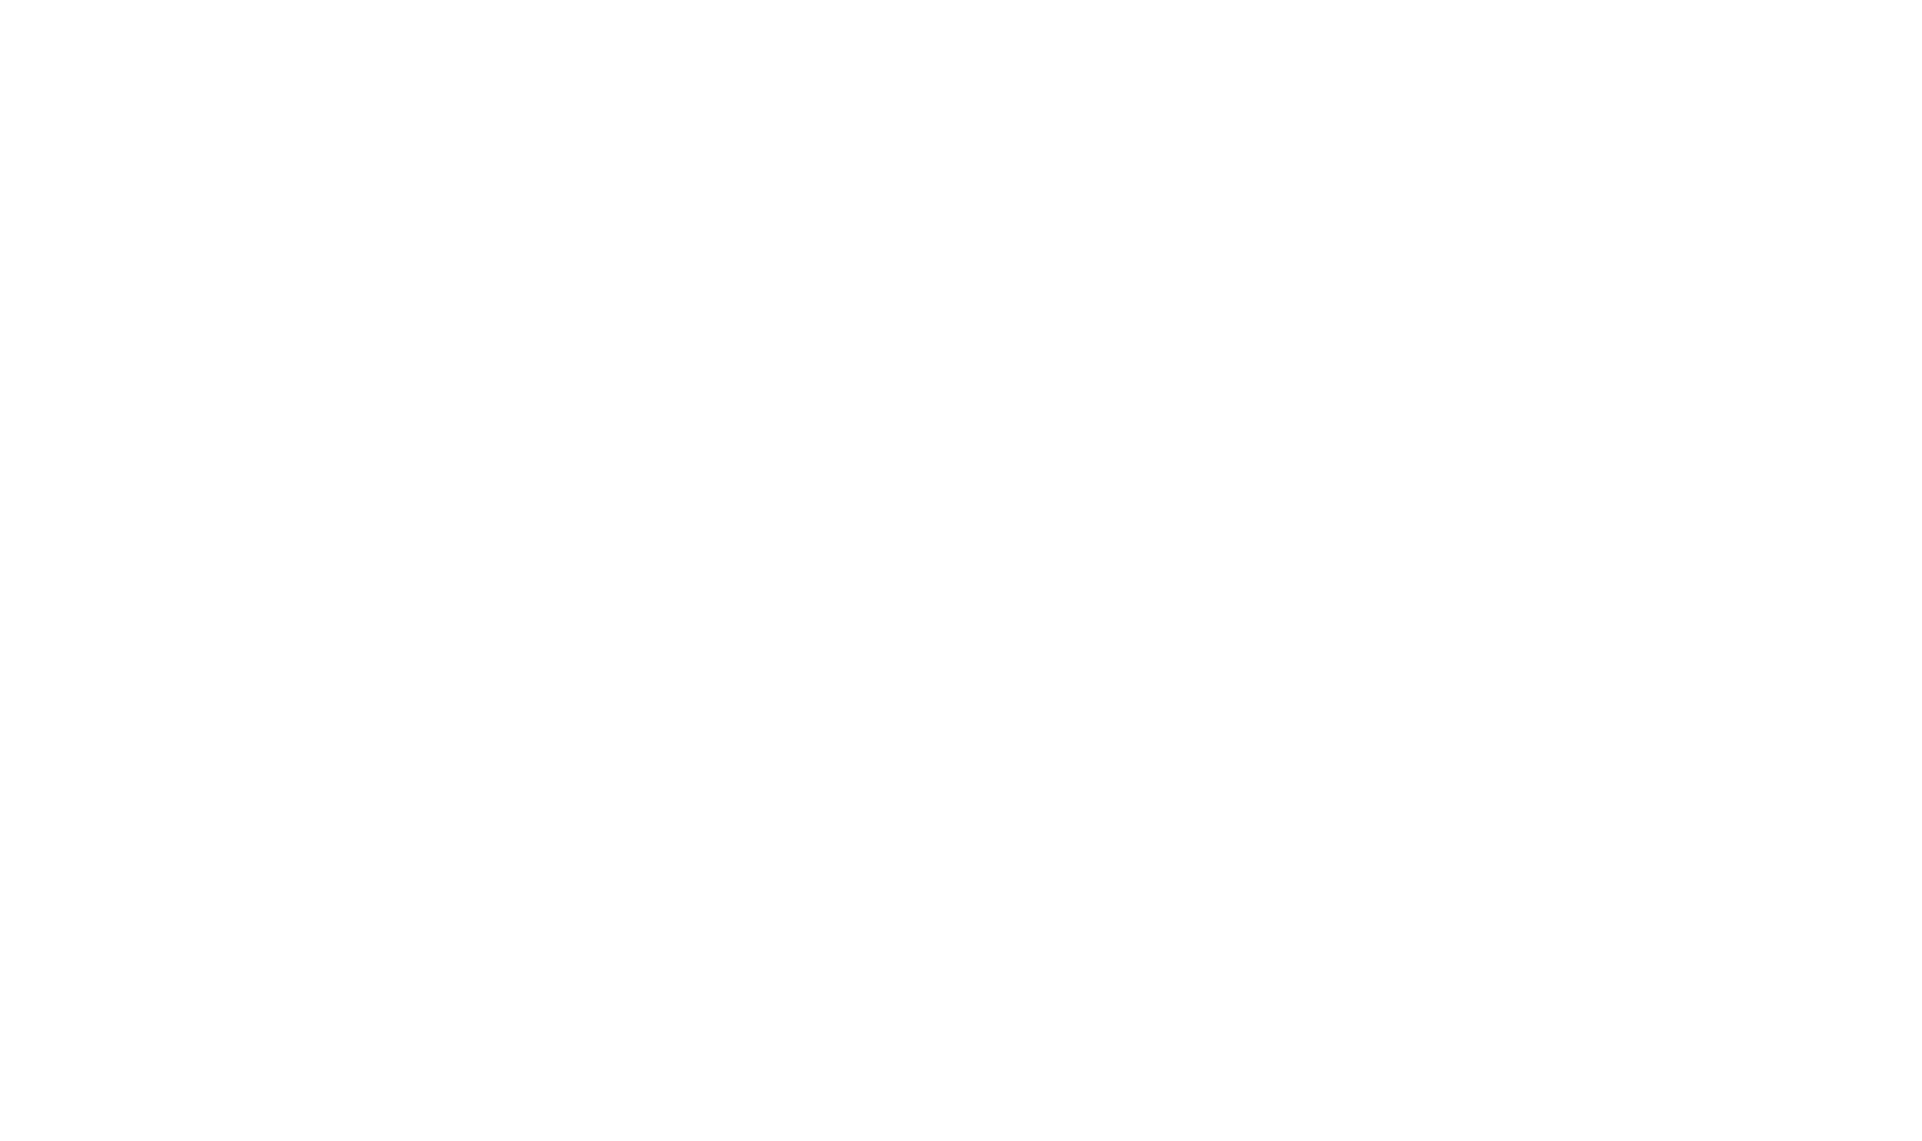 Epiphone official logo